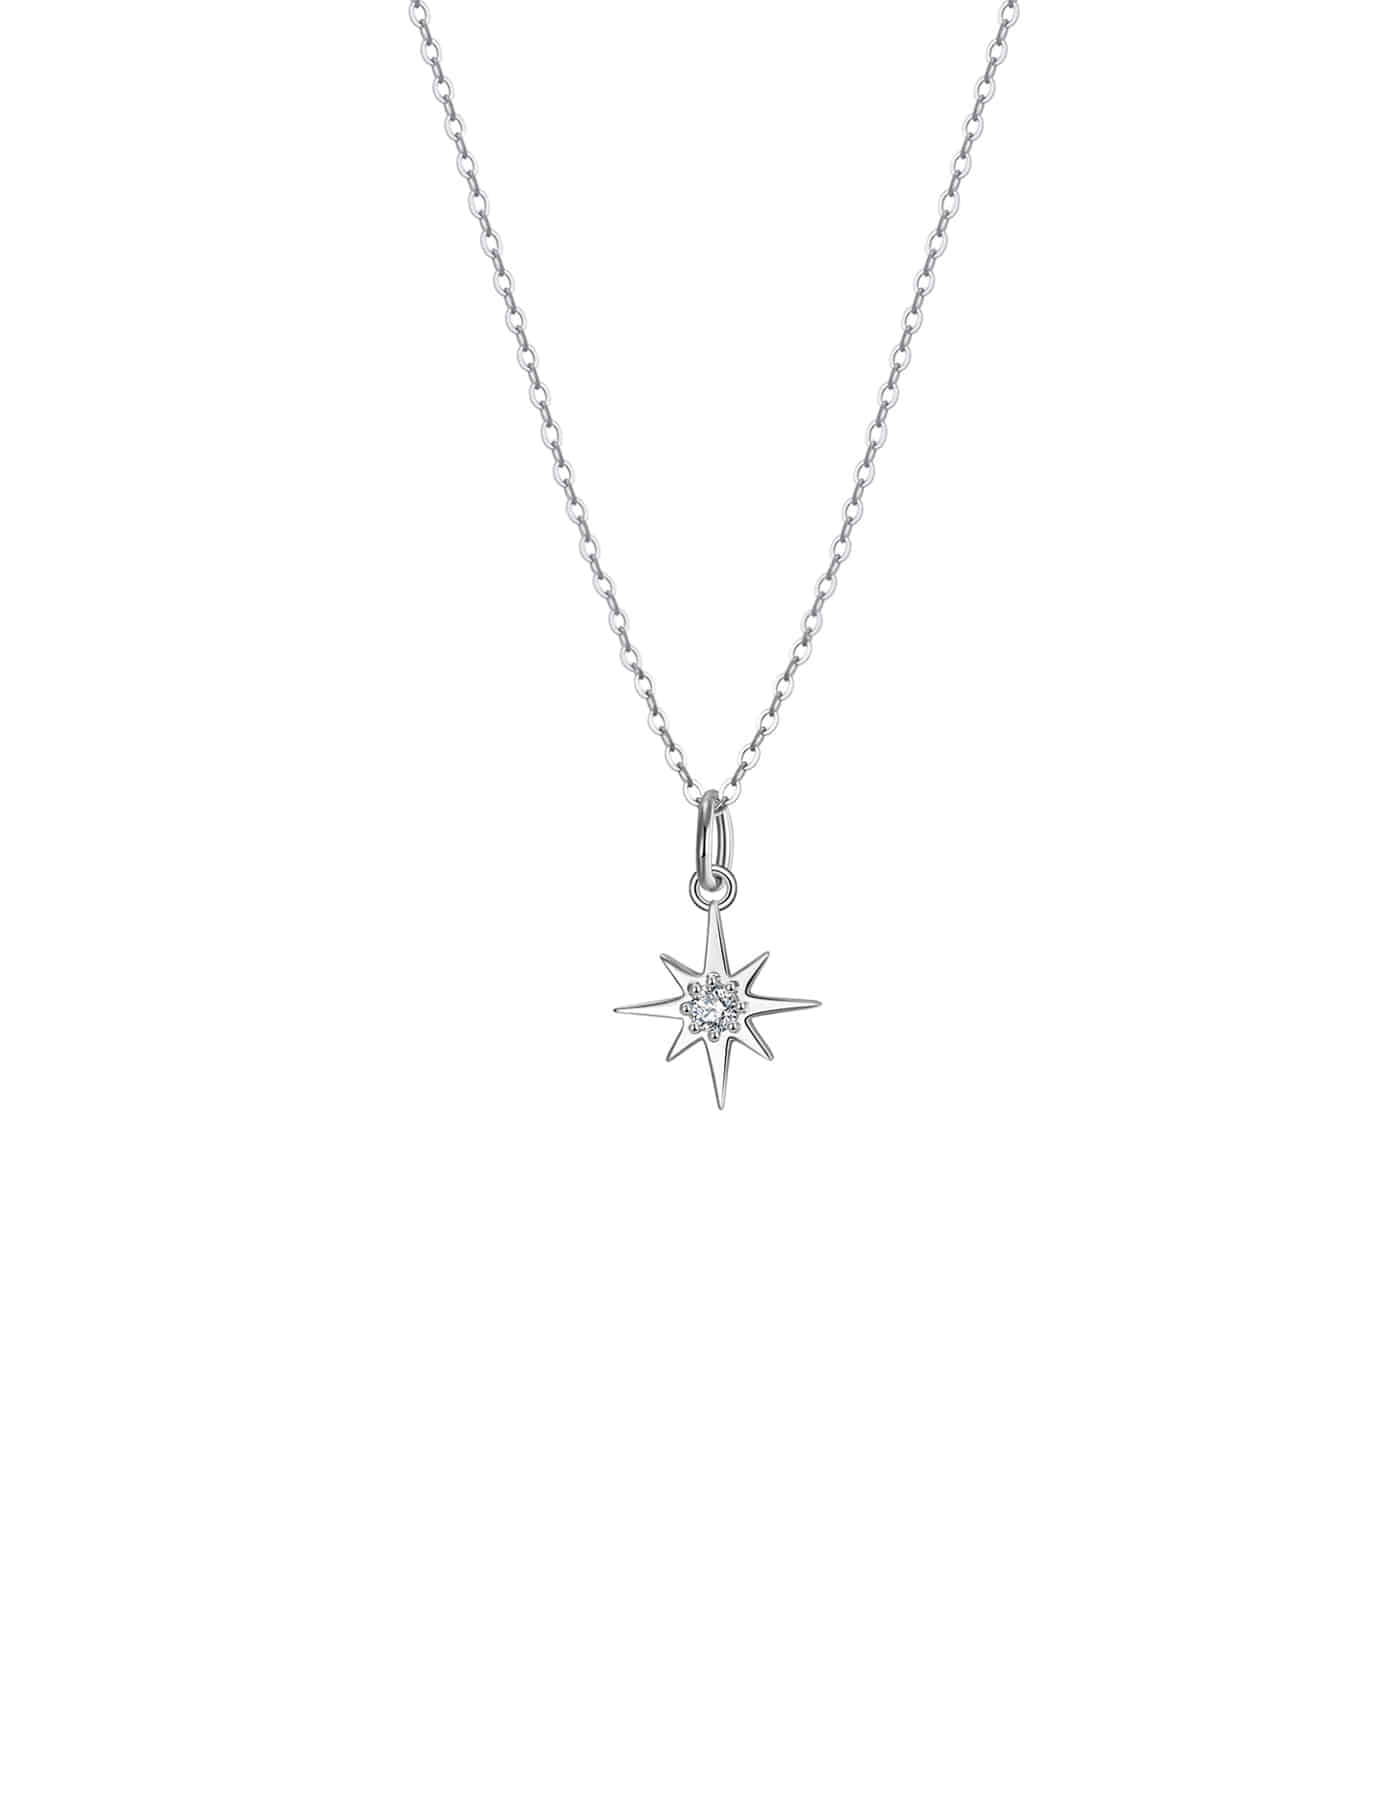 Apollo necklace (WG)